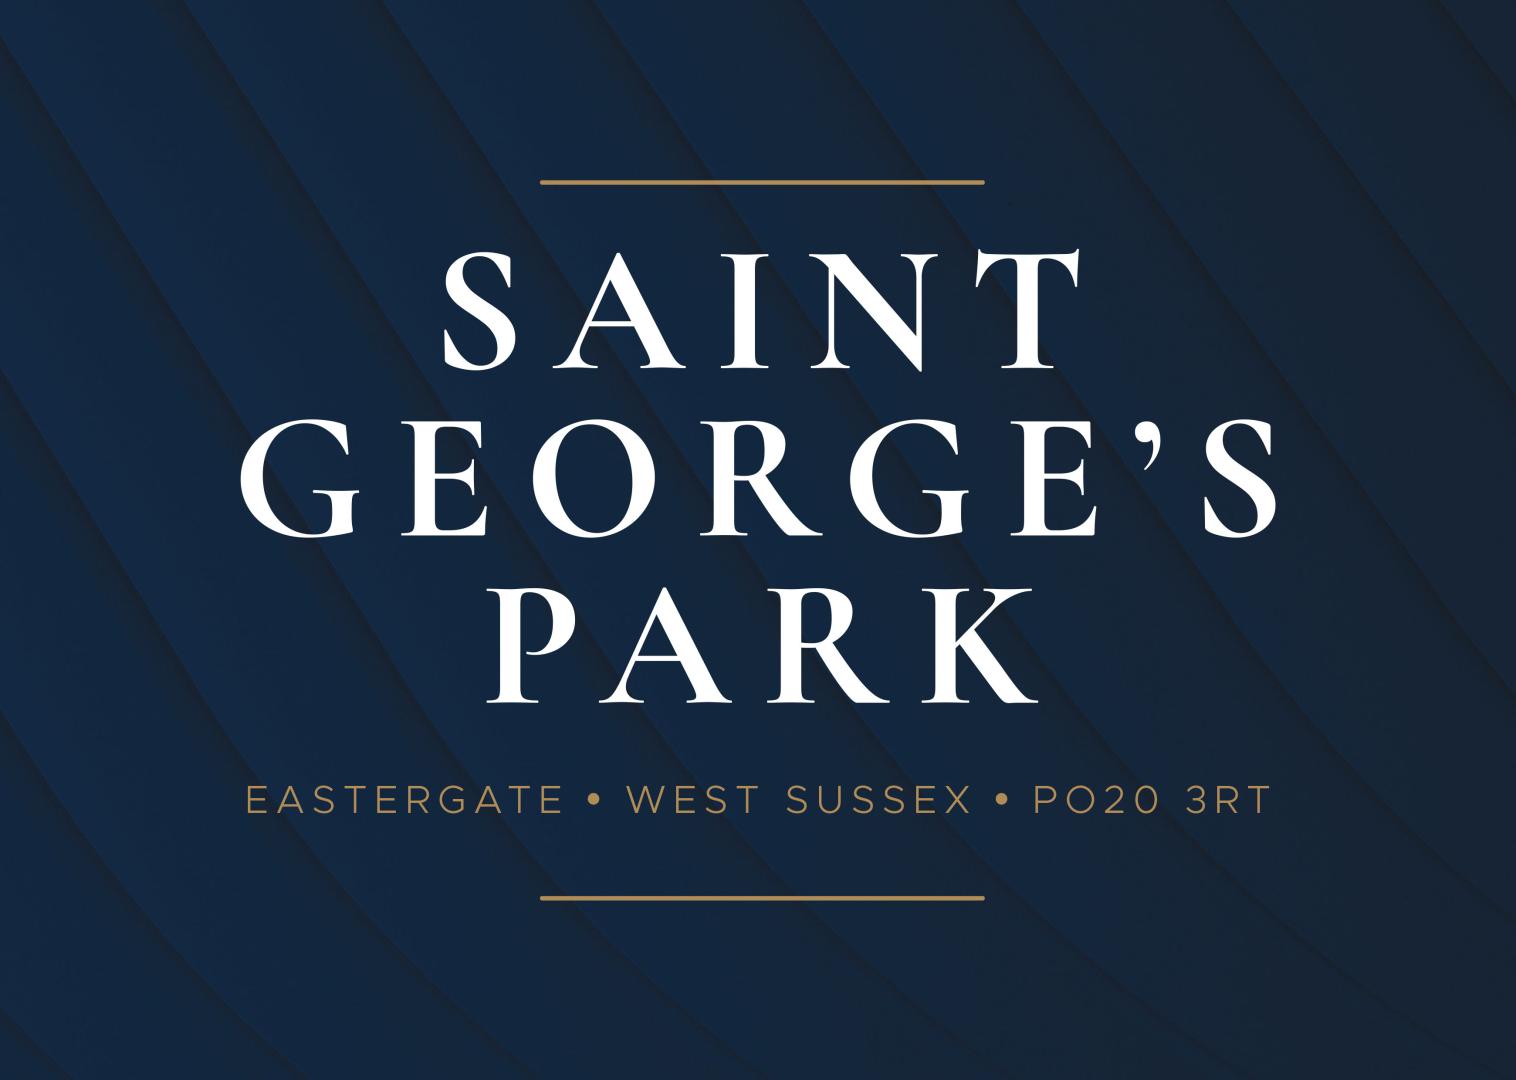 Saint George's Park